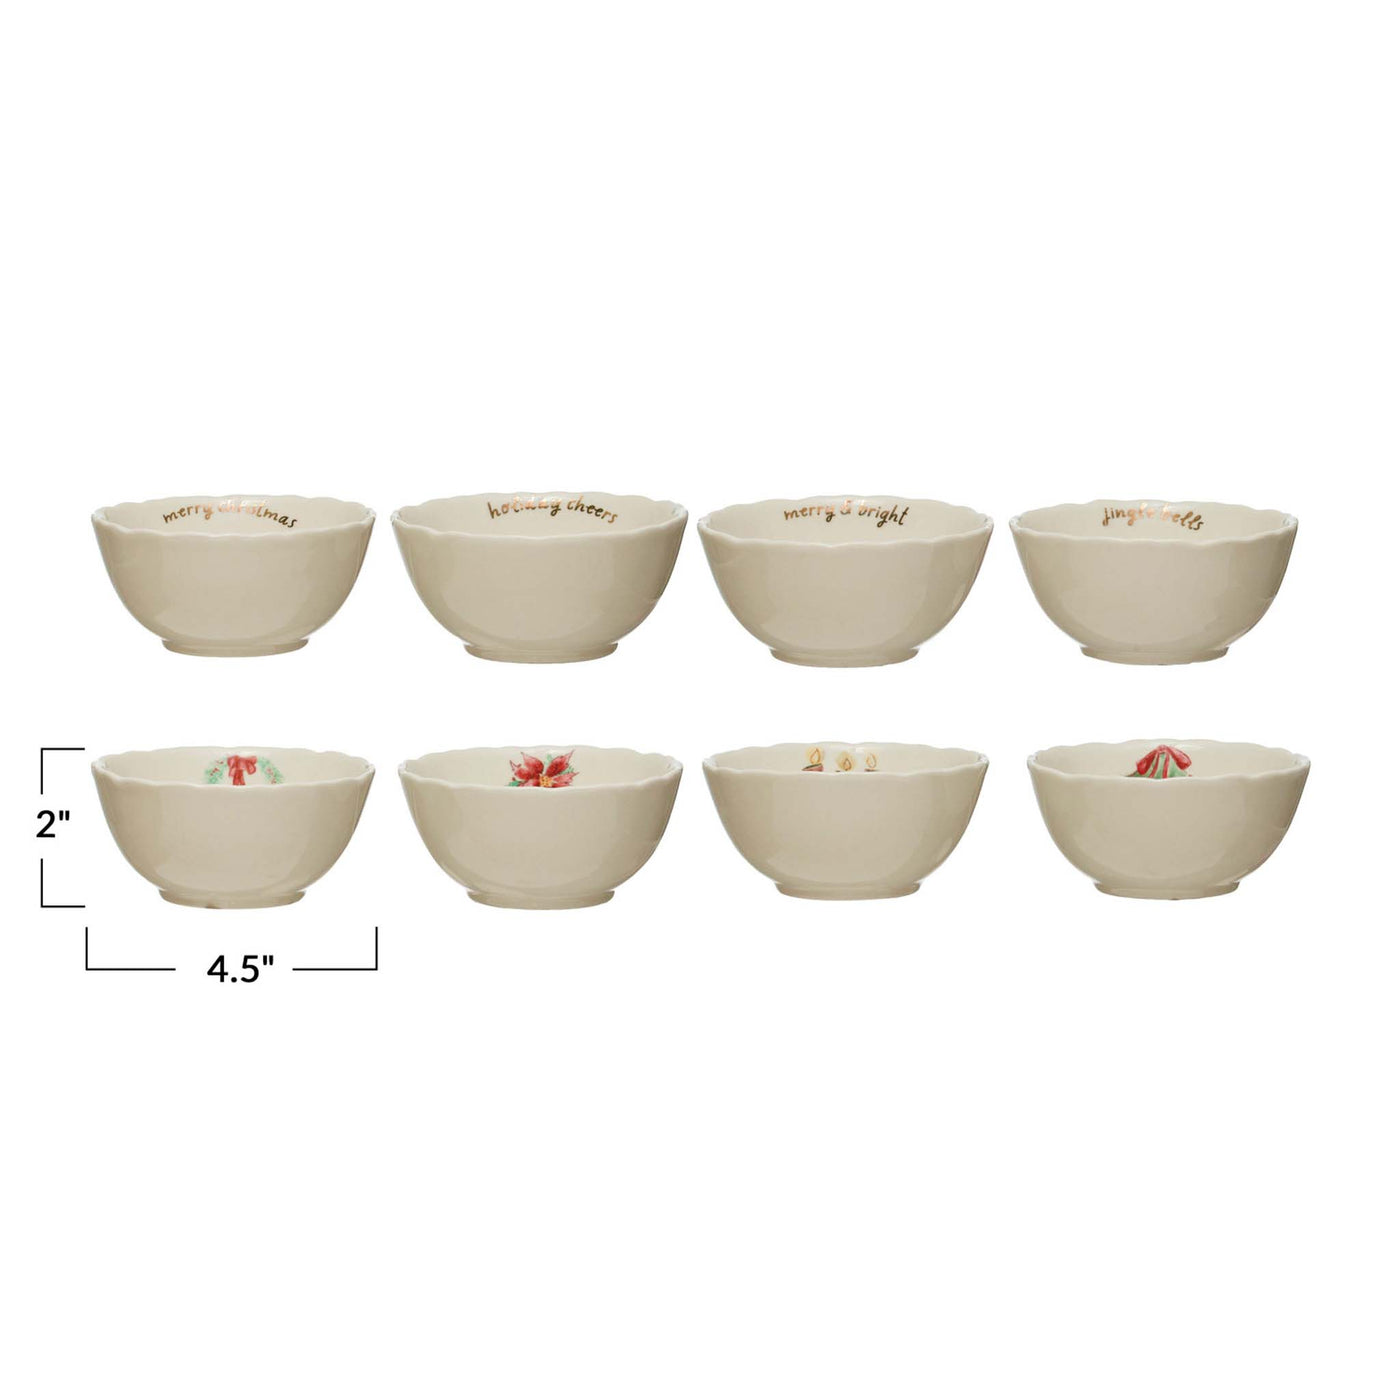 4-1/2" Holiday Greeting Stoneware Bowl (4 Styles)